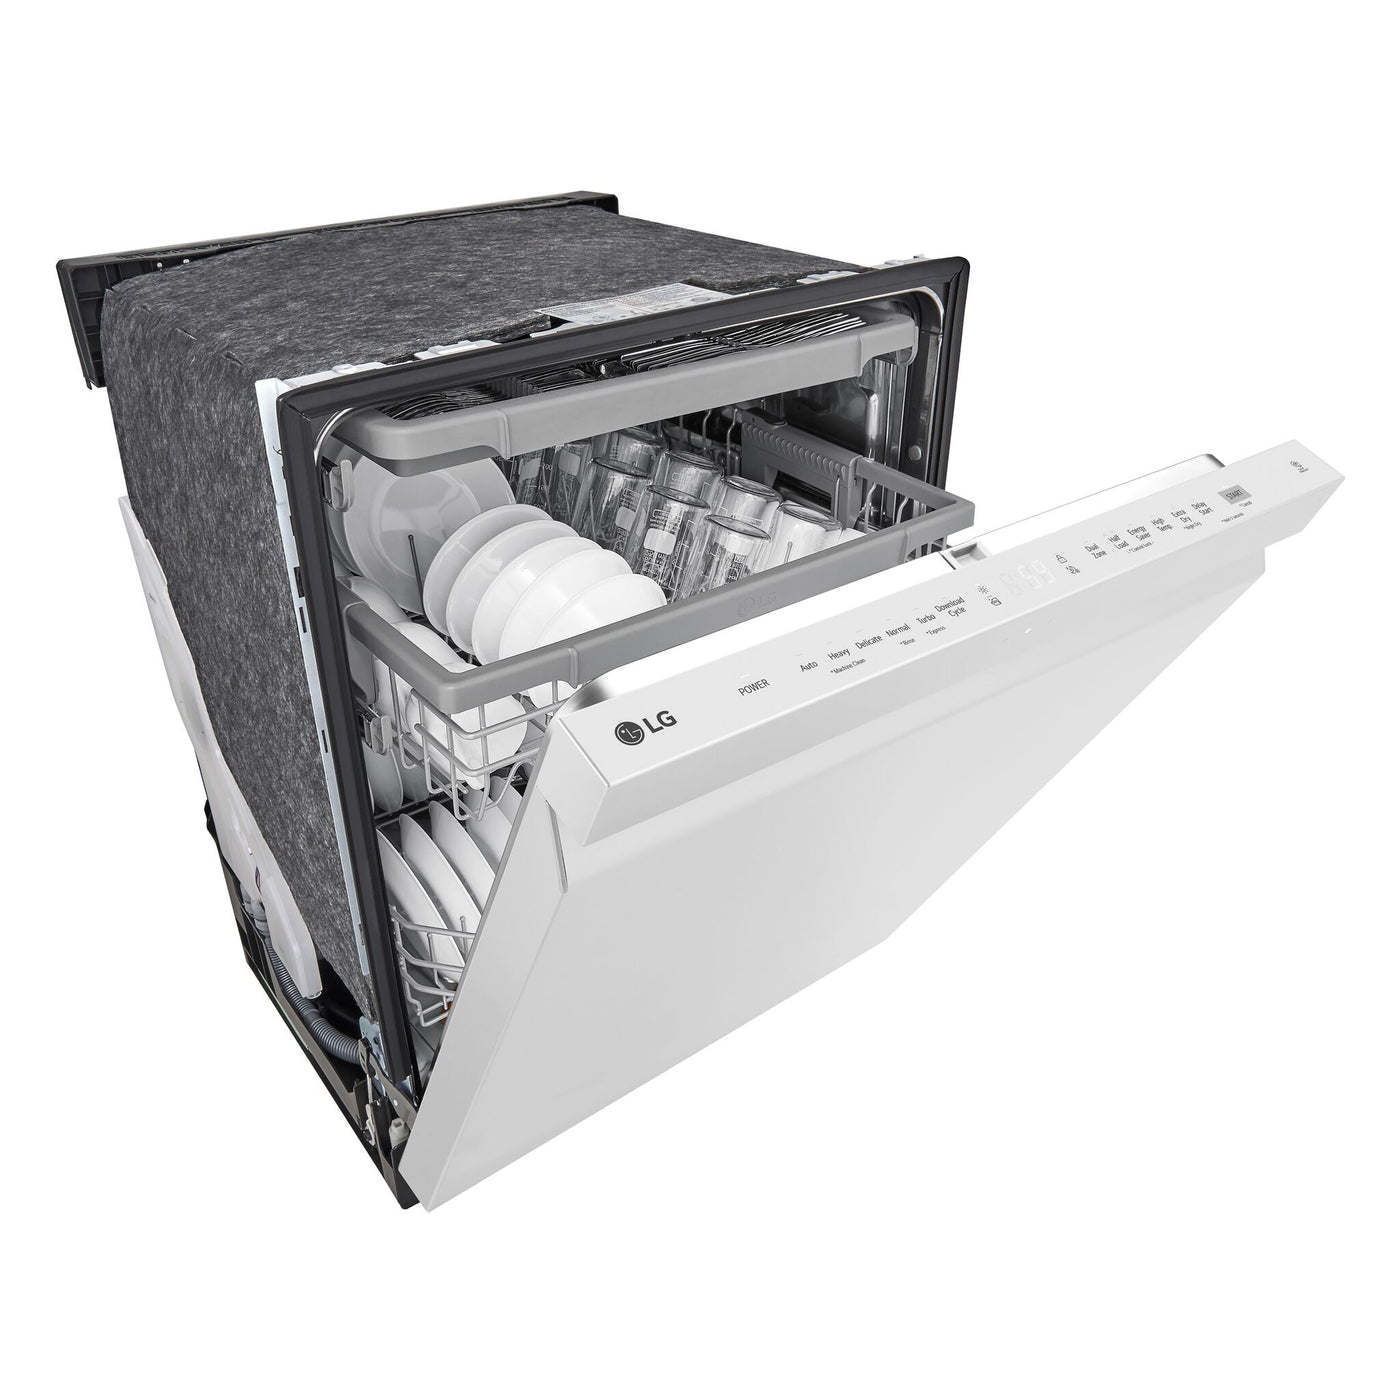 LG White Dishwasher with QuadWash™ - LDPN4542W